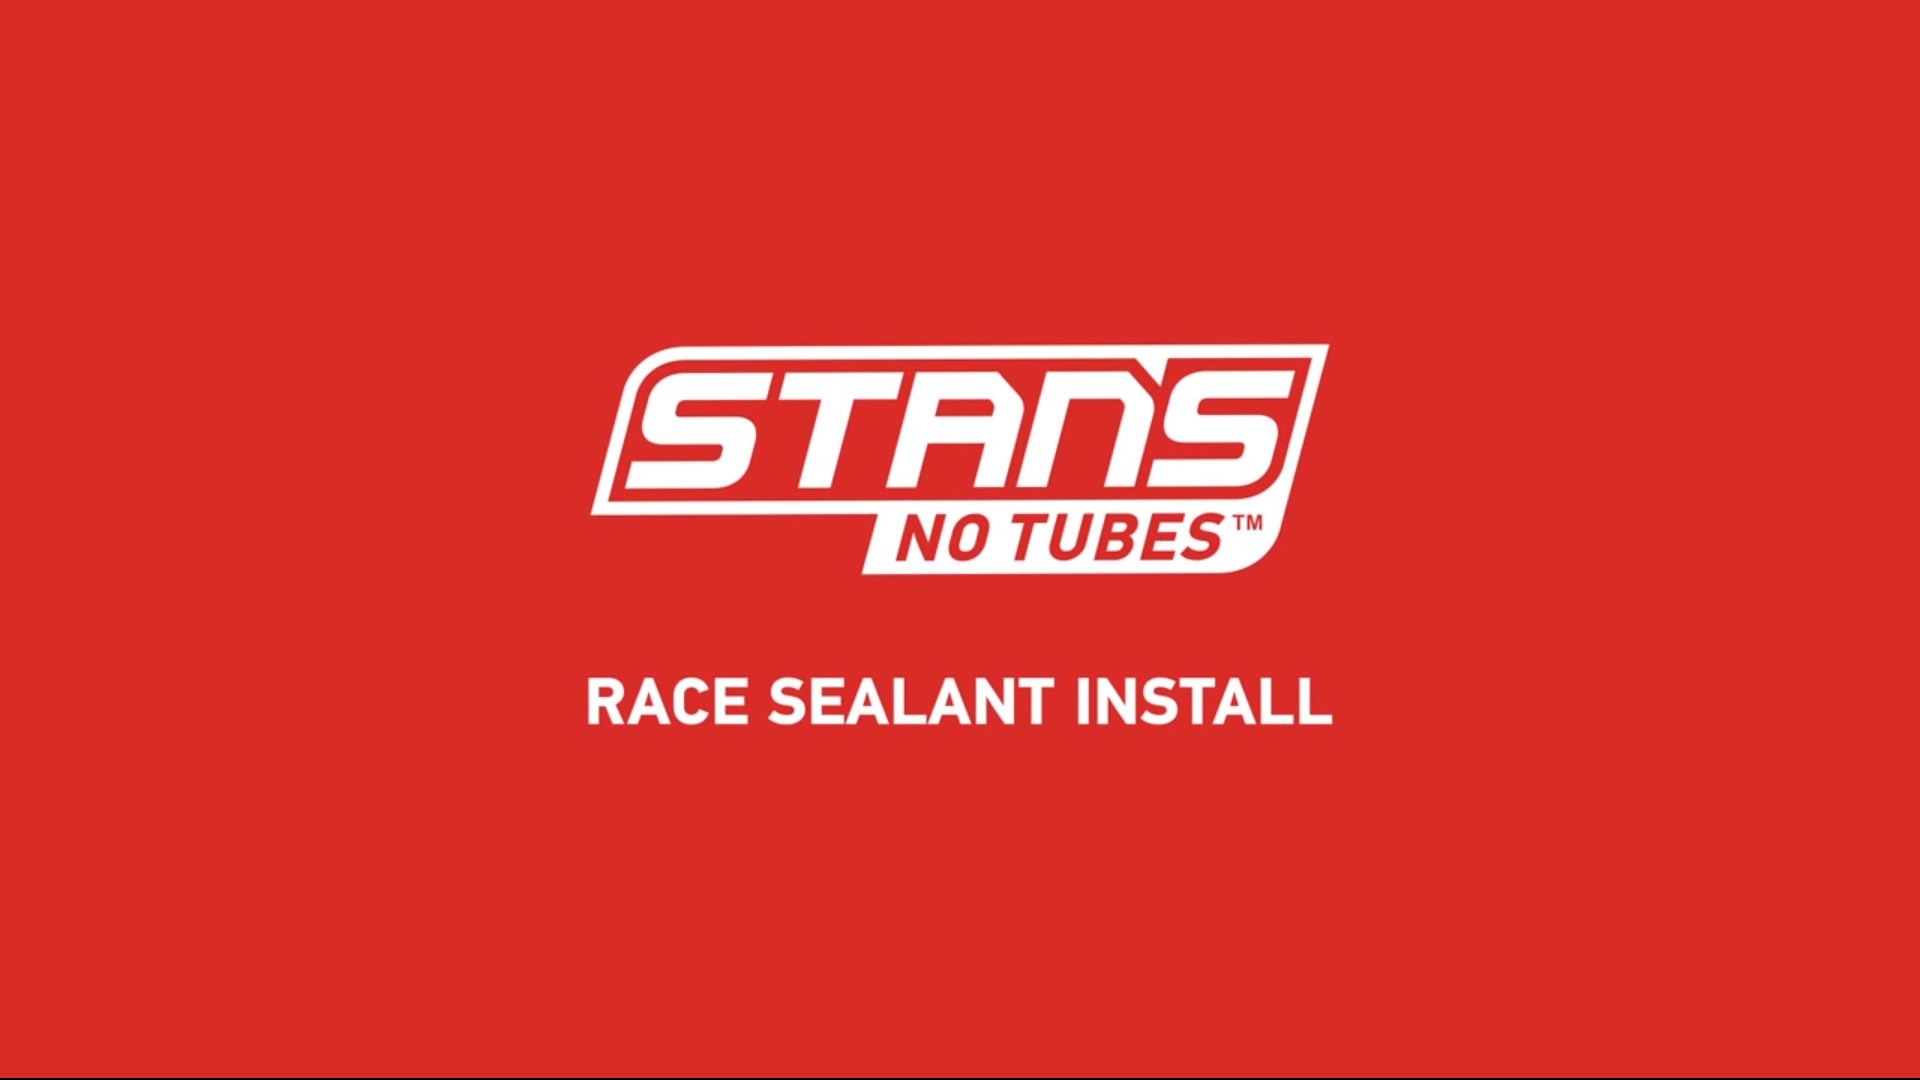 Race Sealant Install - Stan's NoTubes